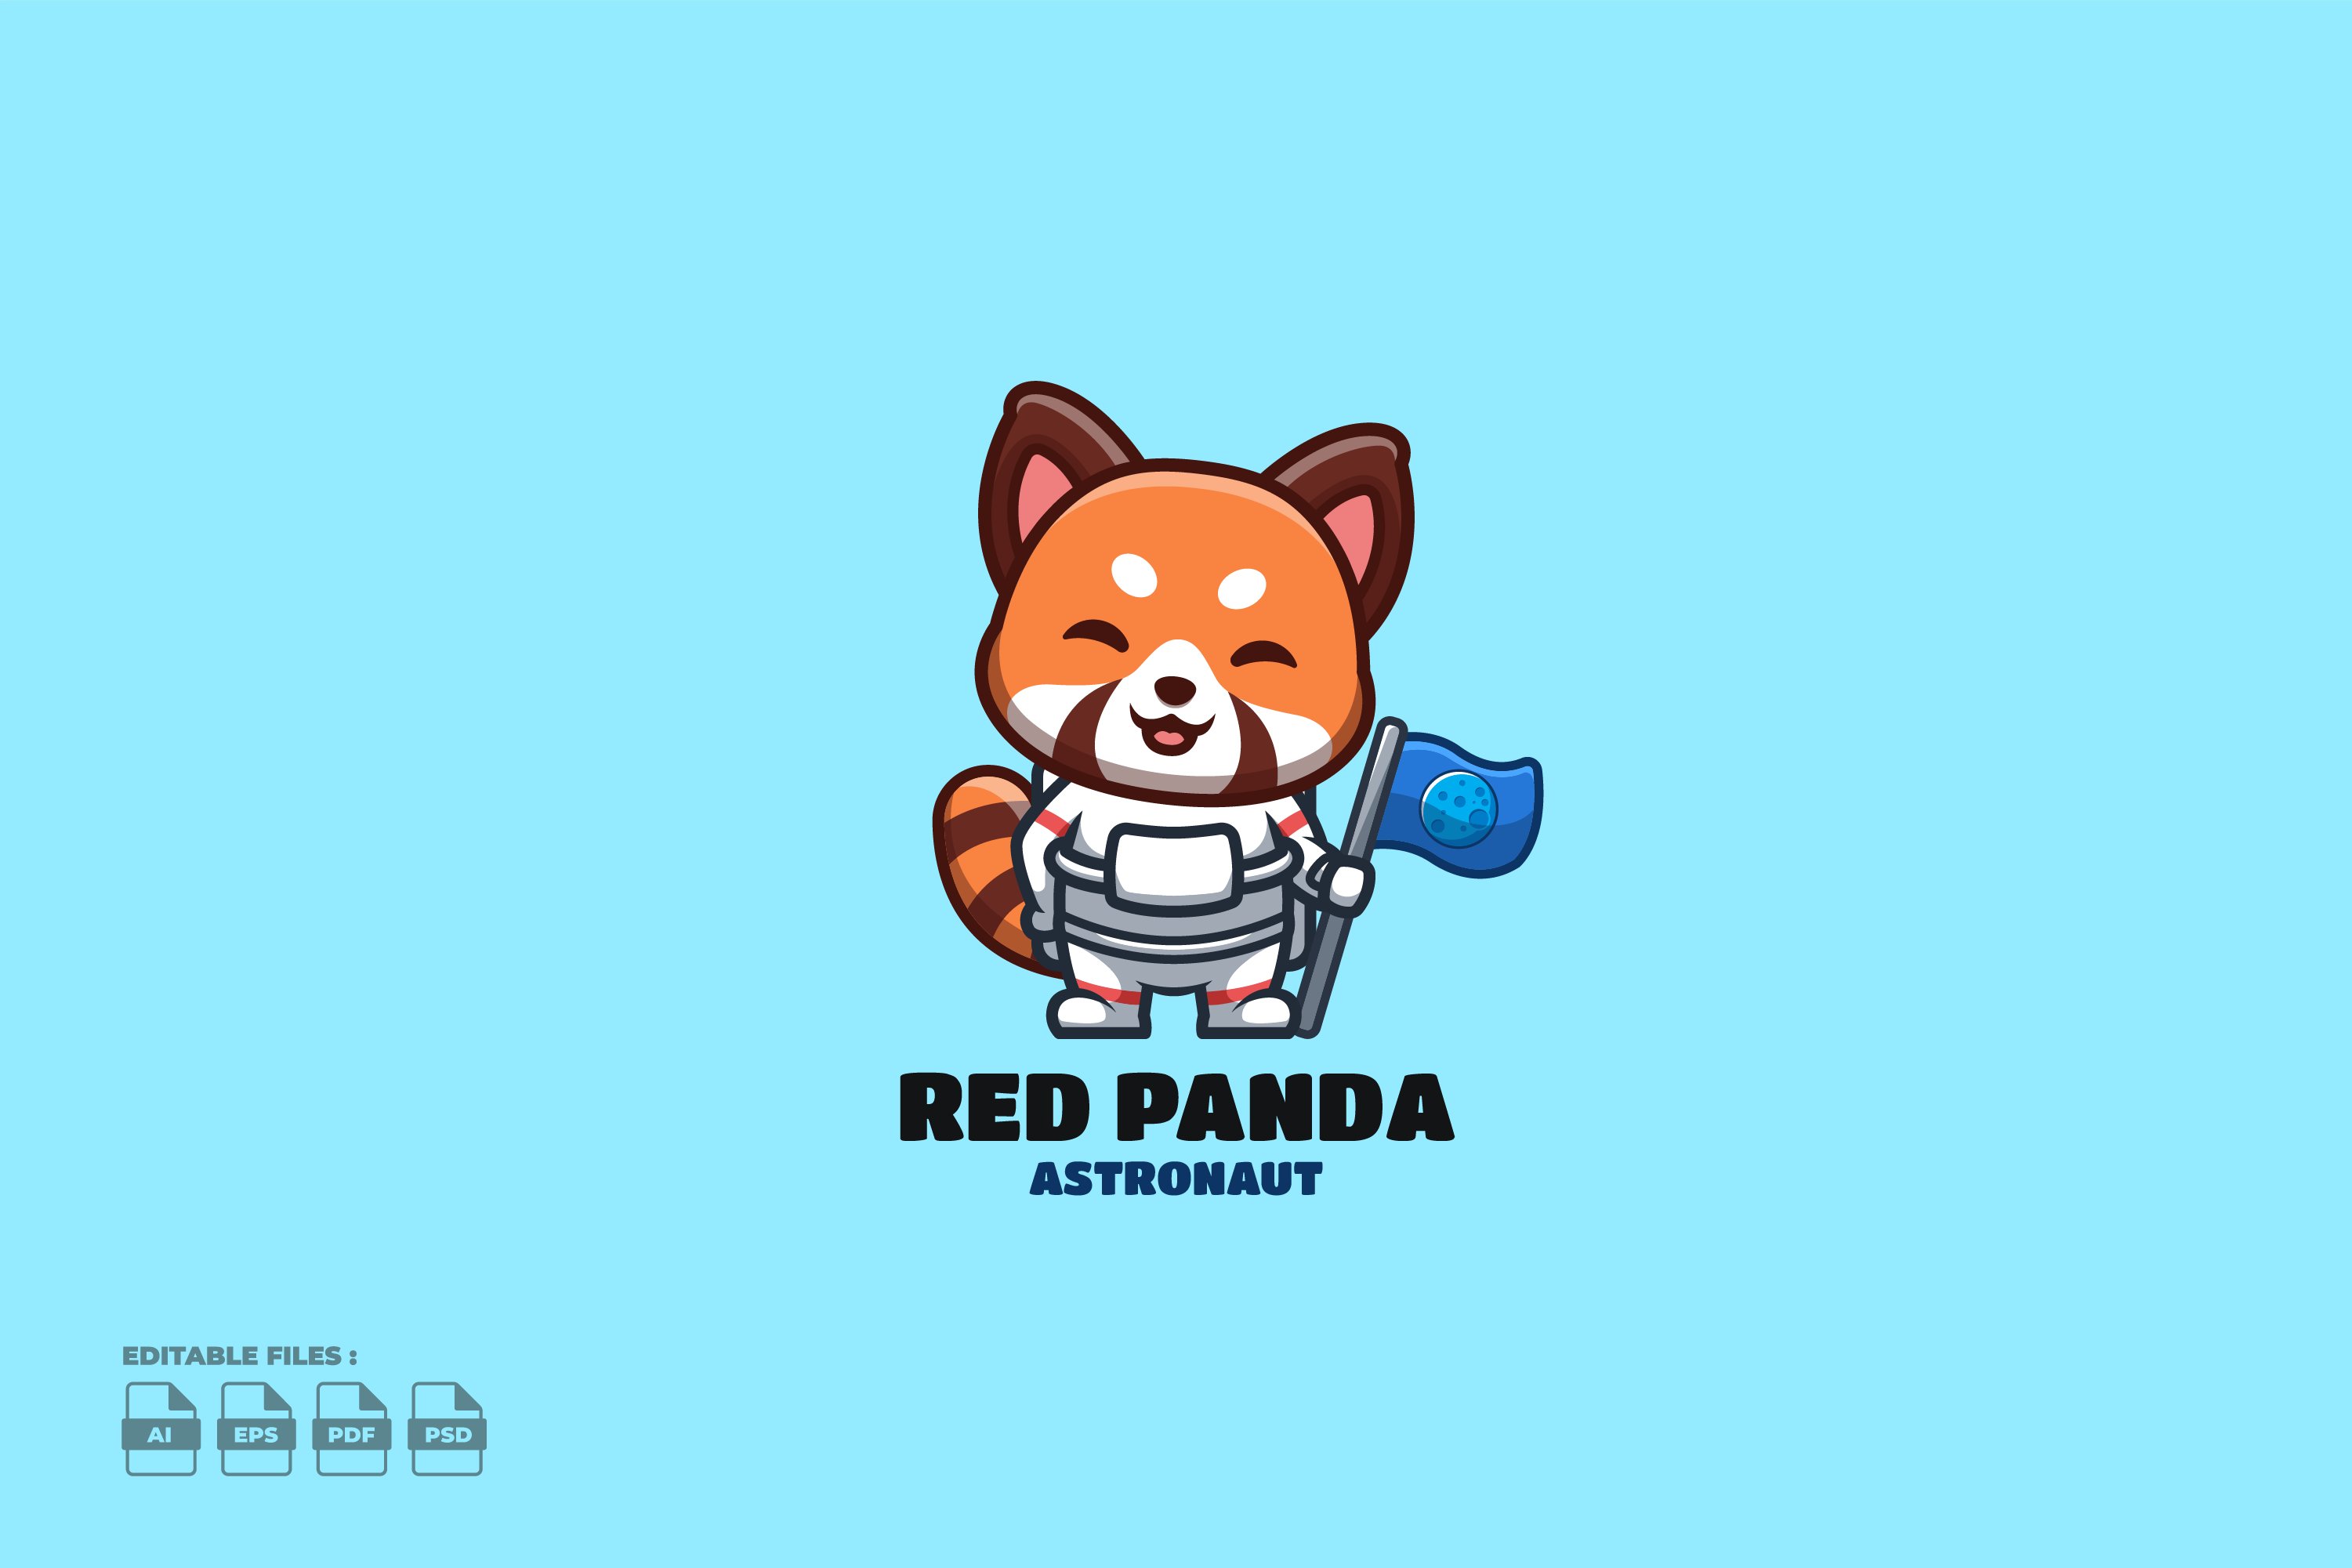 Astronaut Red Panda Cute Mascot Logo cover image.